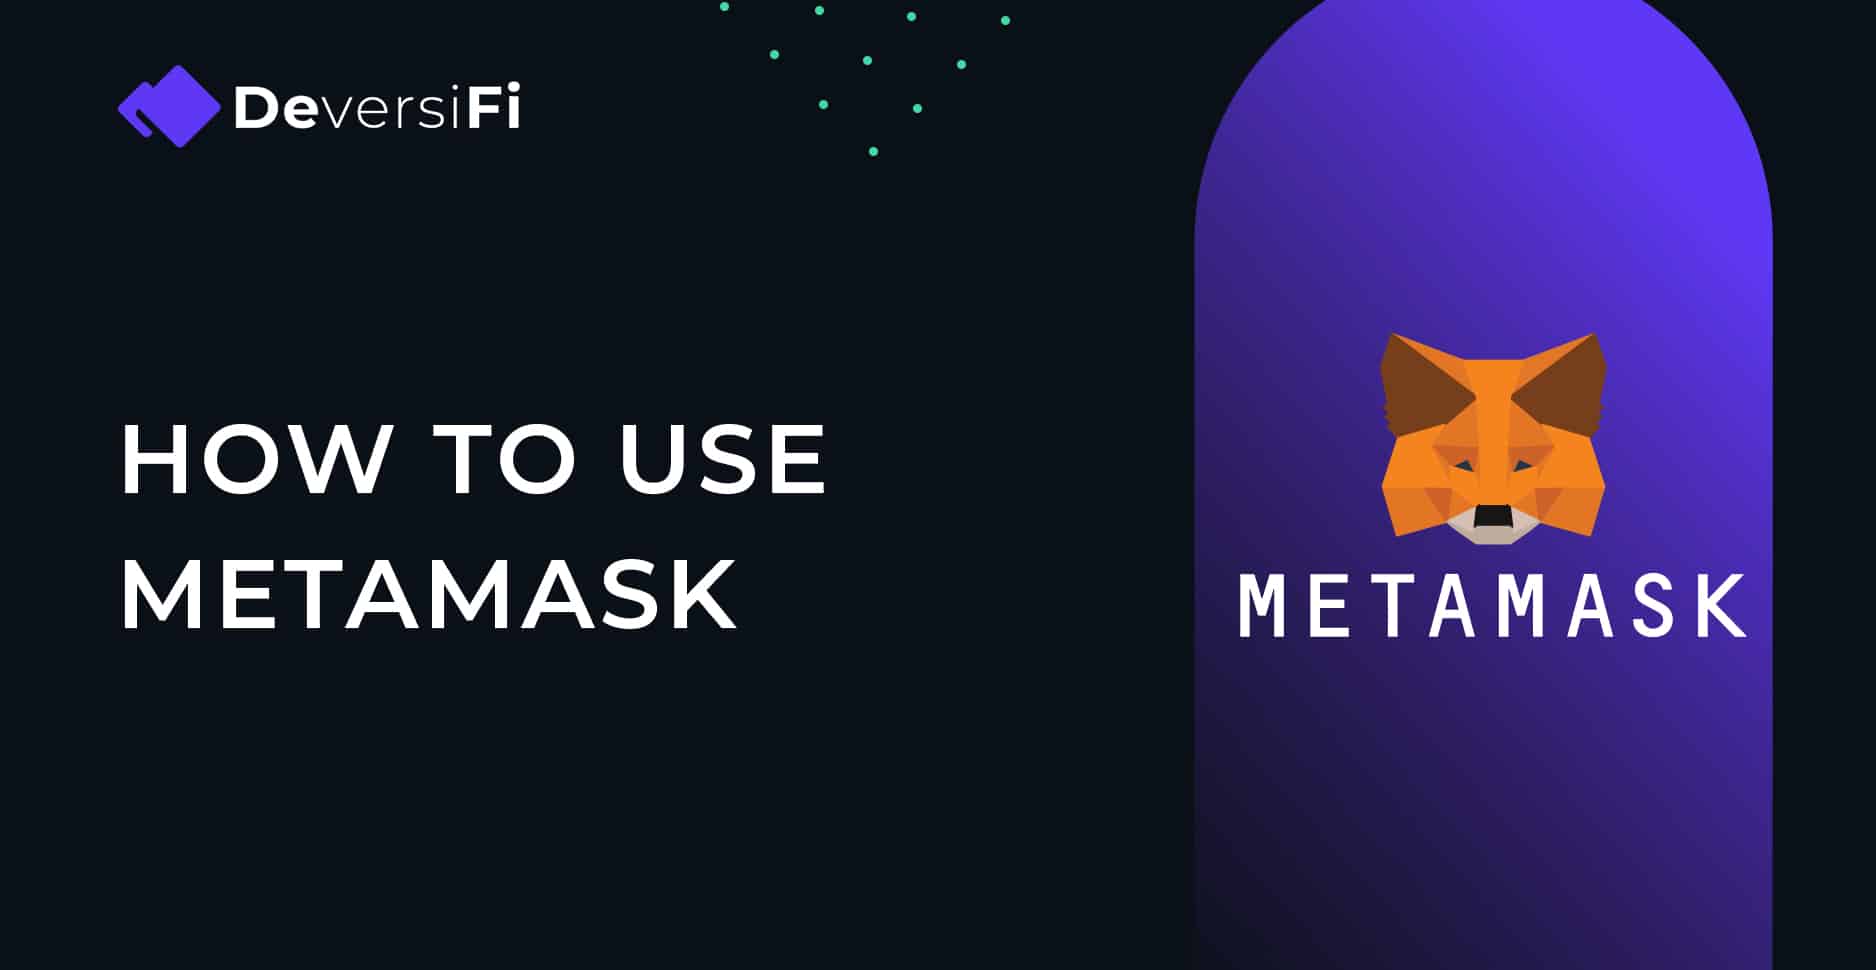 use metamask to purchase debt